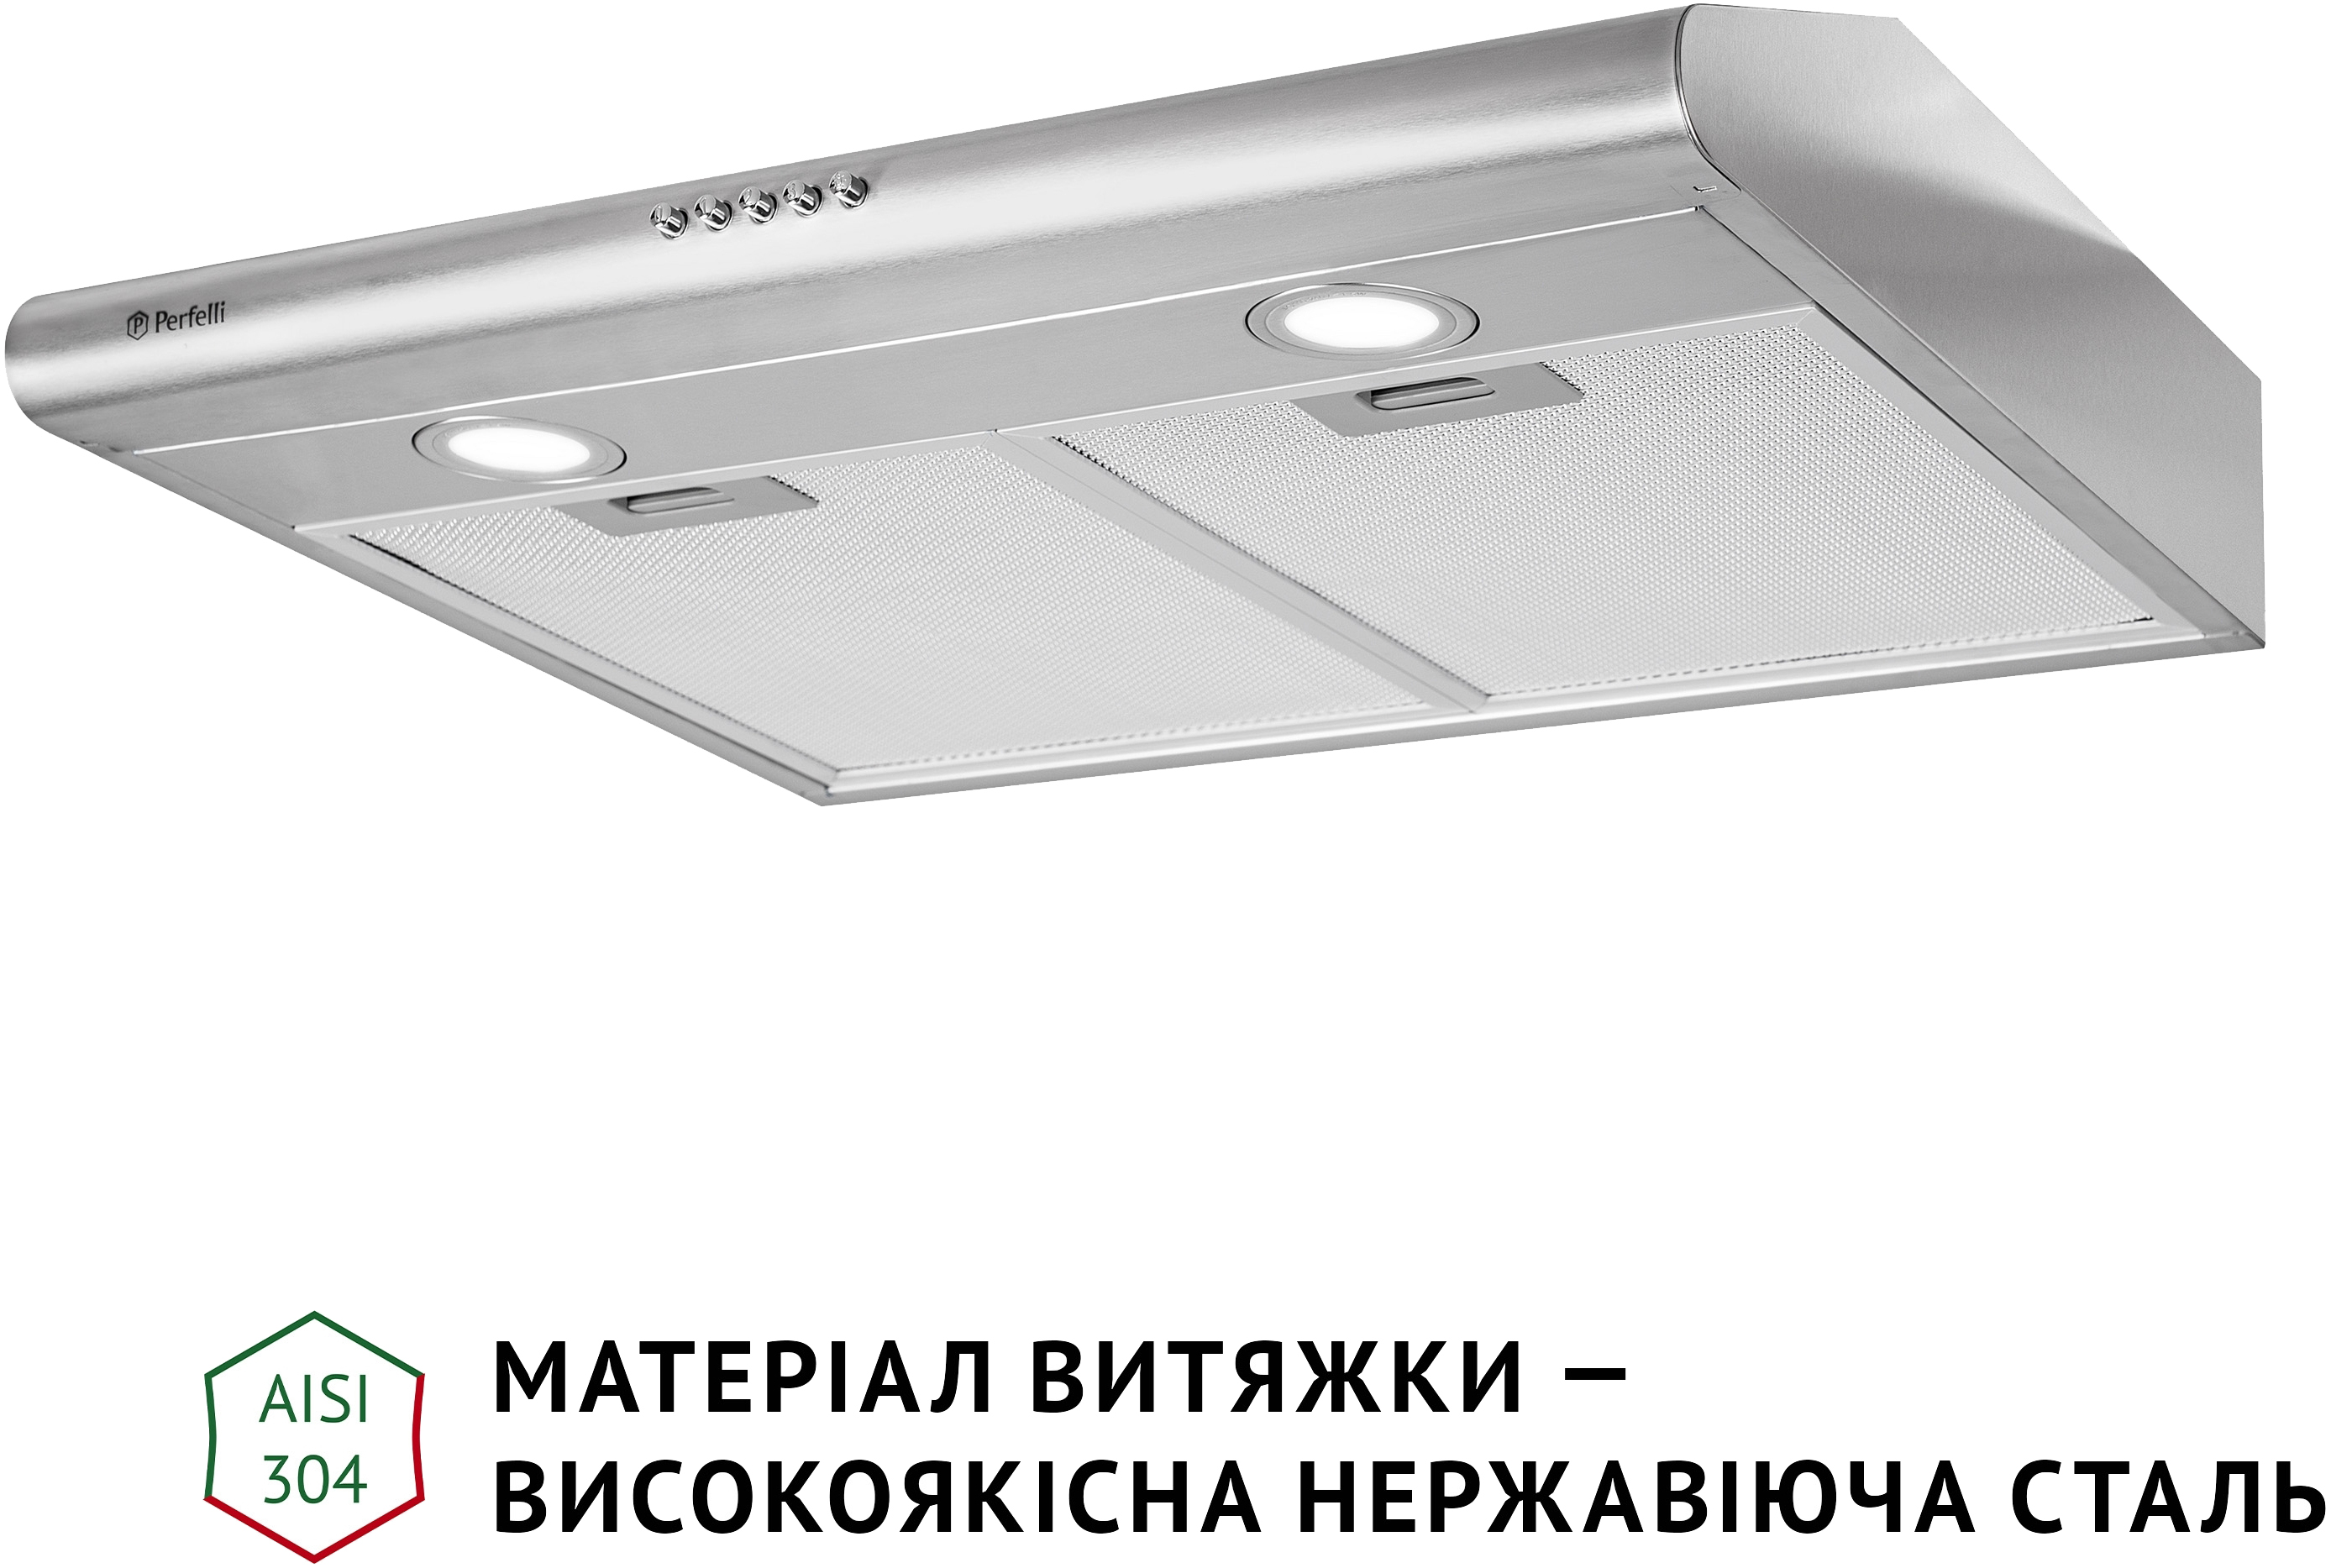 продаём Perfelli PL 6022 I LED в Украине - фото 4